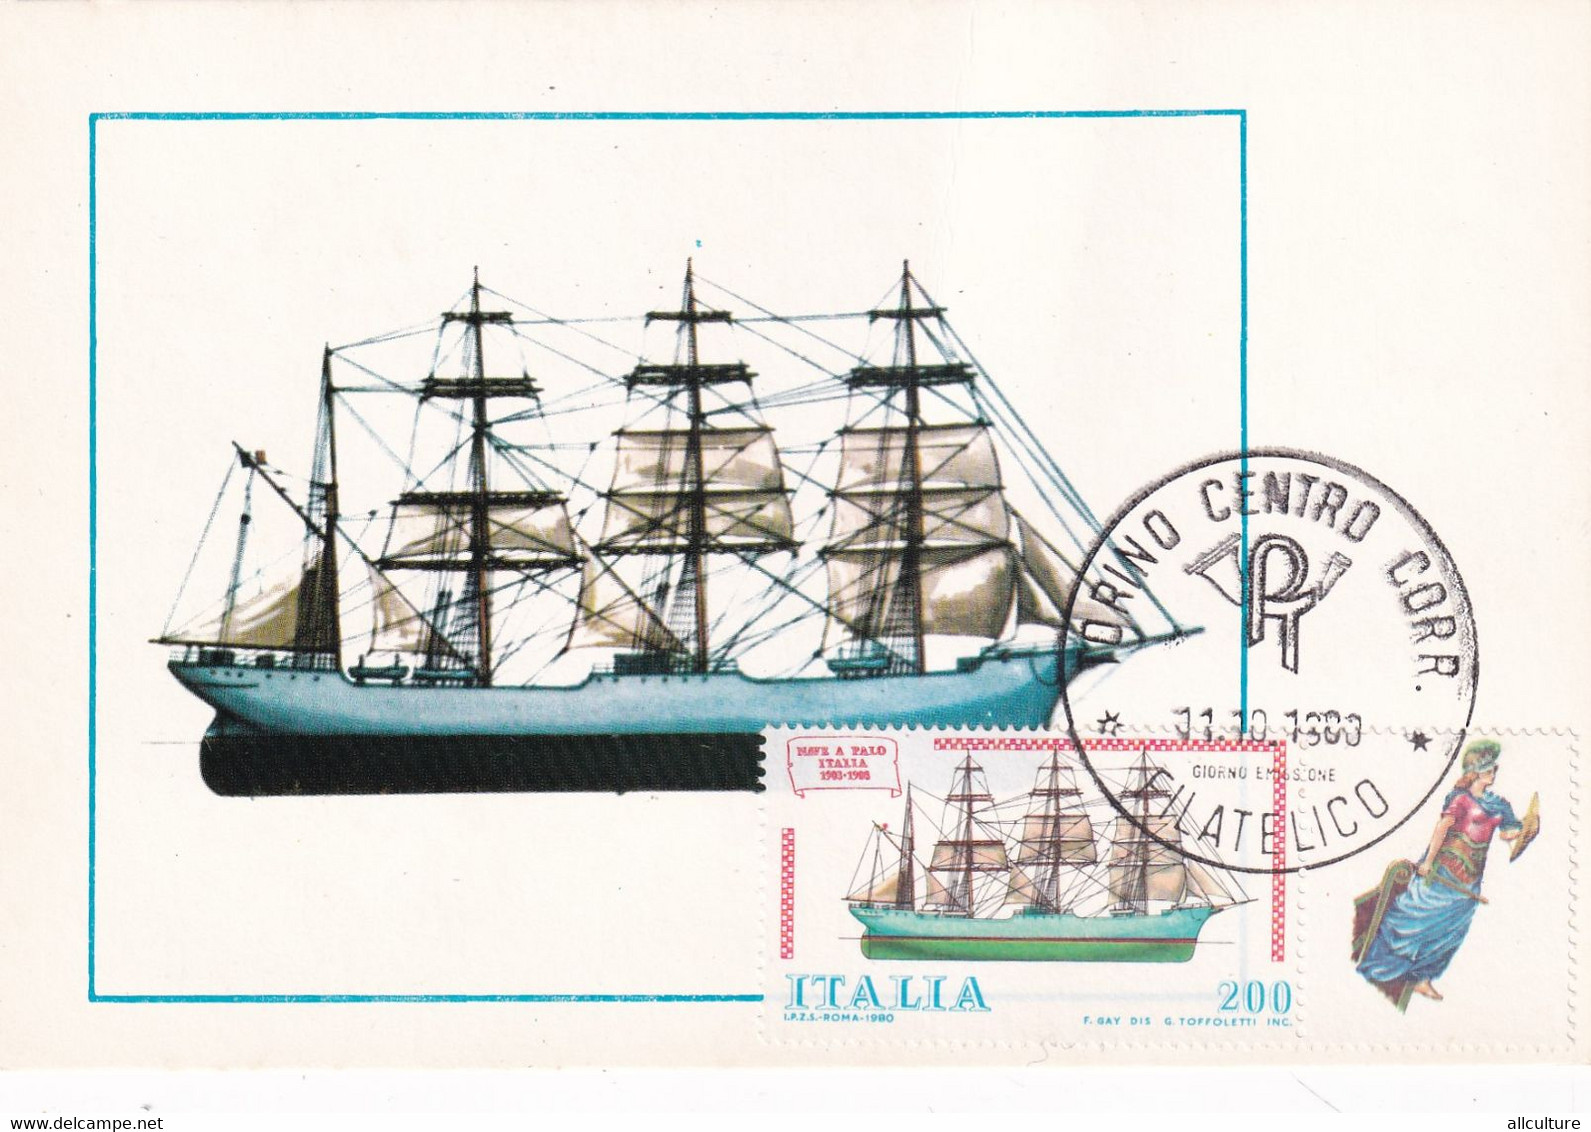 A10858- NAVE SHIP CORVETTE " A.S.GABBIANO", TORINO ITALIA 1979 MAXIMUM CARD USED STAMP - Cartes-Maximum (CM)